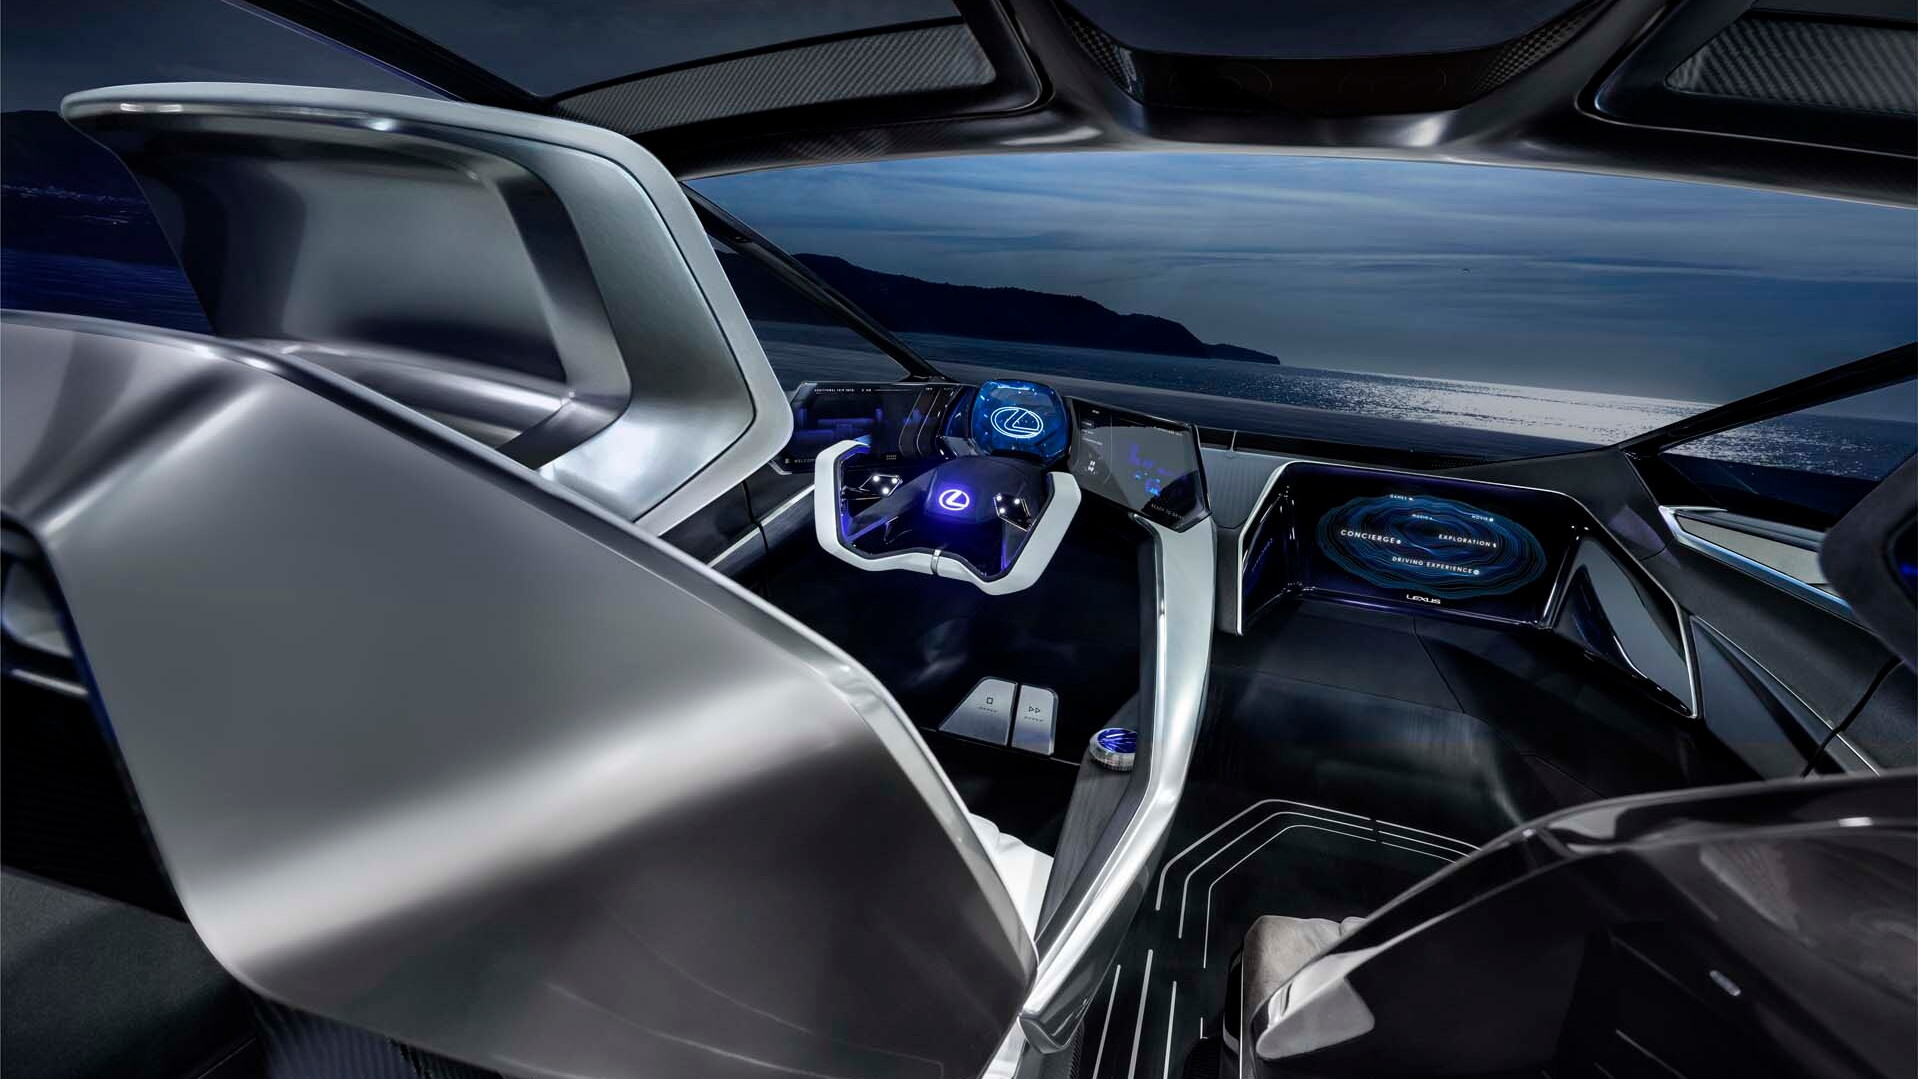 Lexus shows off insane concept electric vehicle